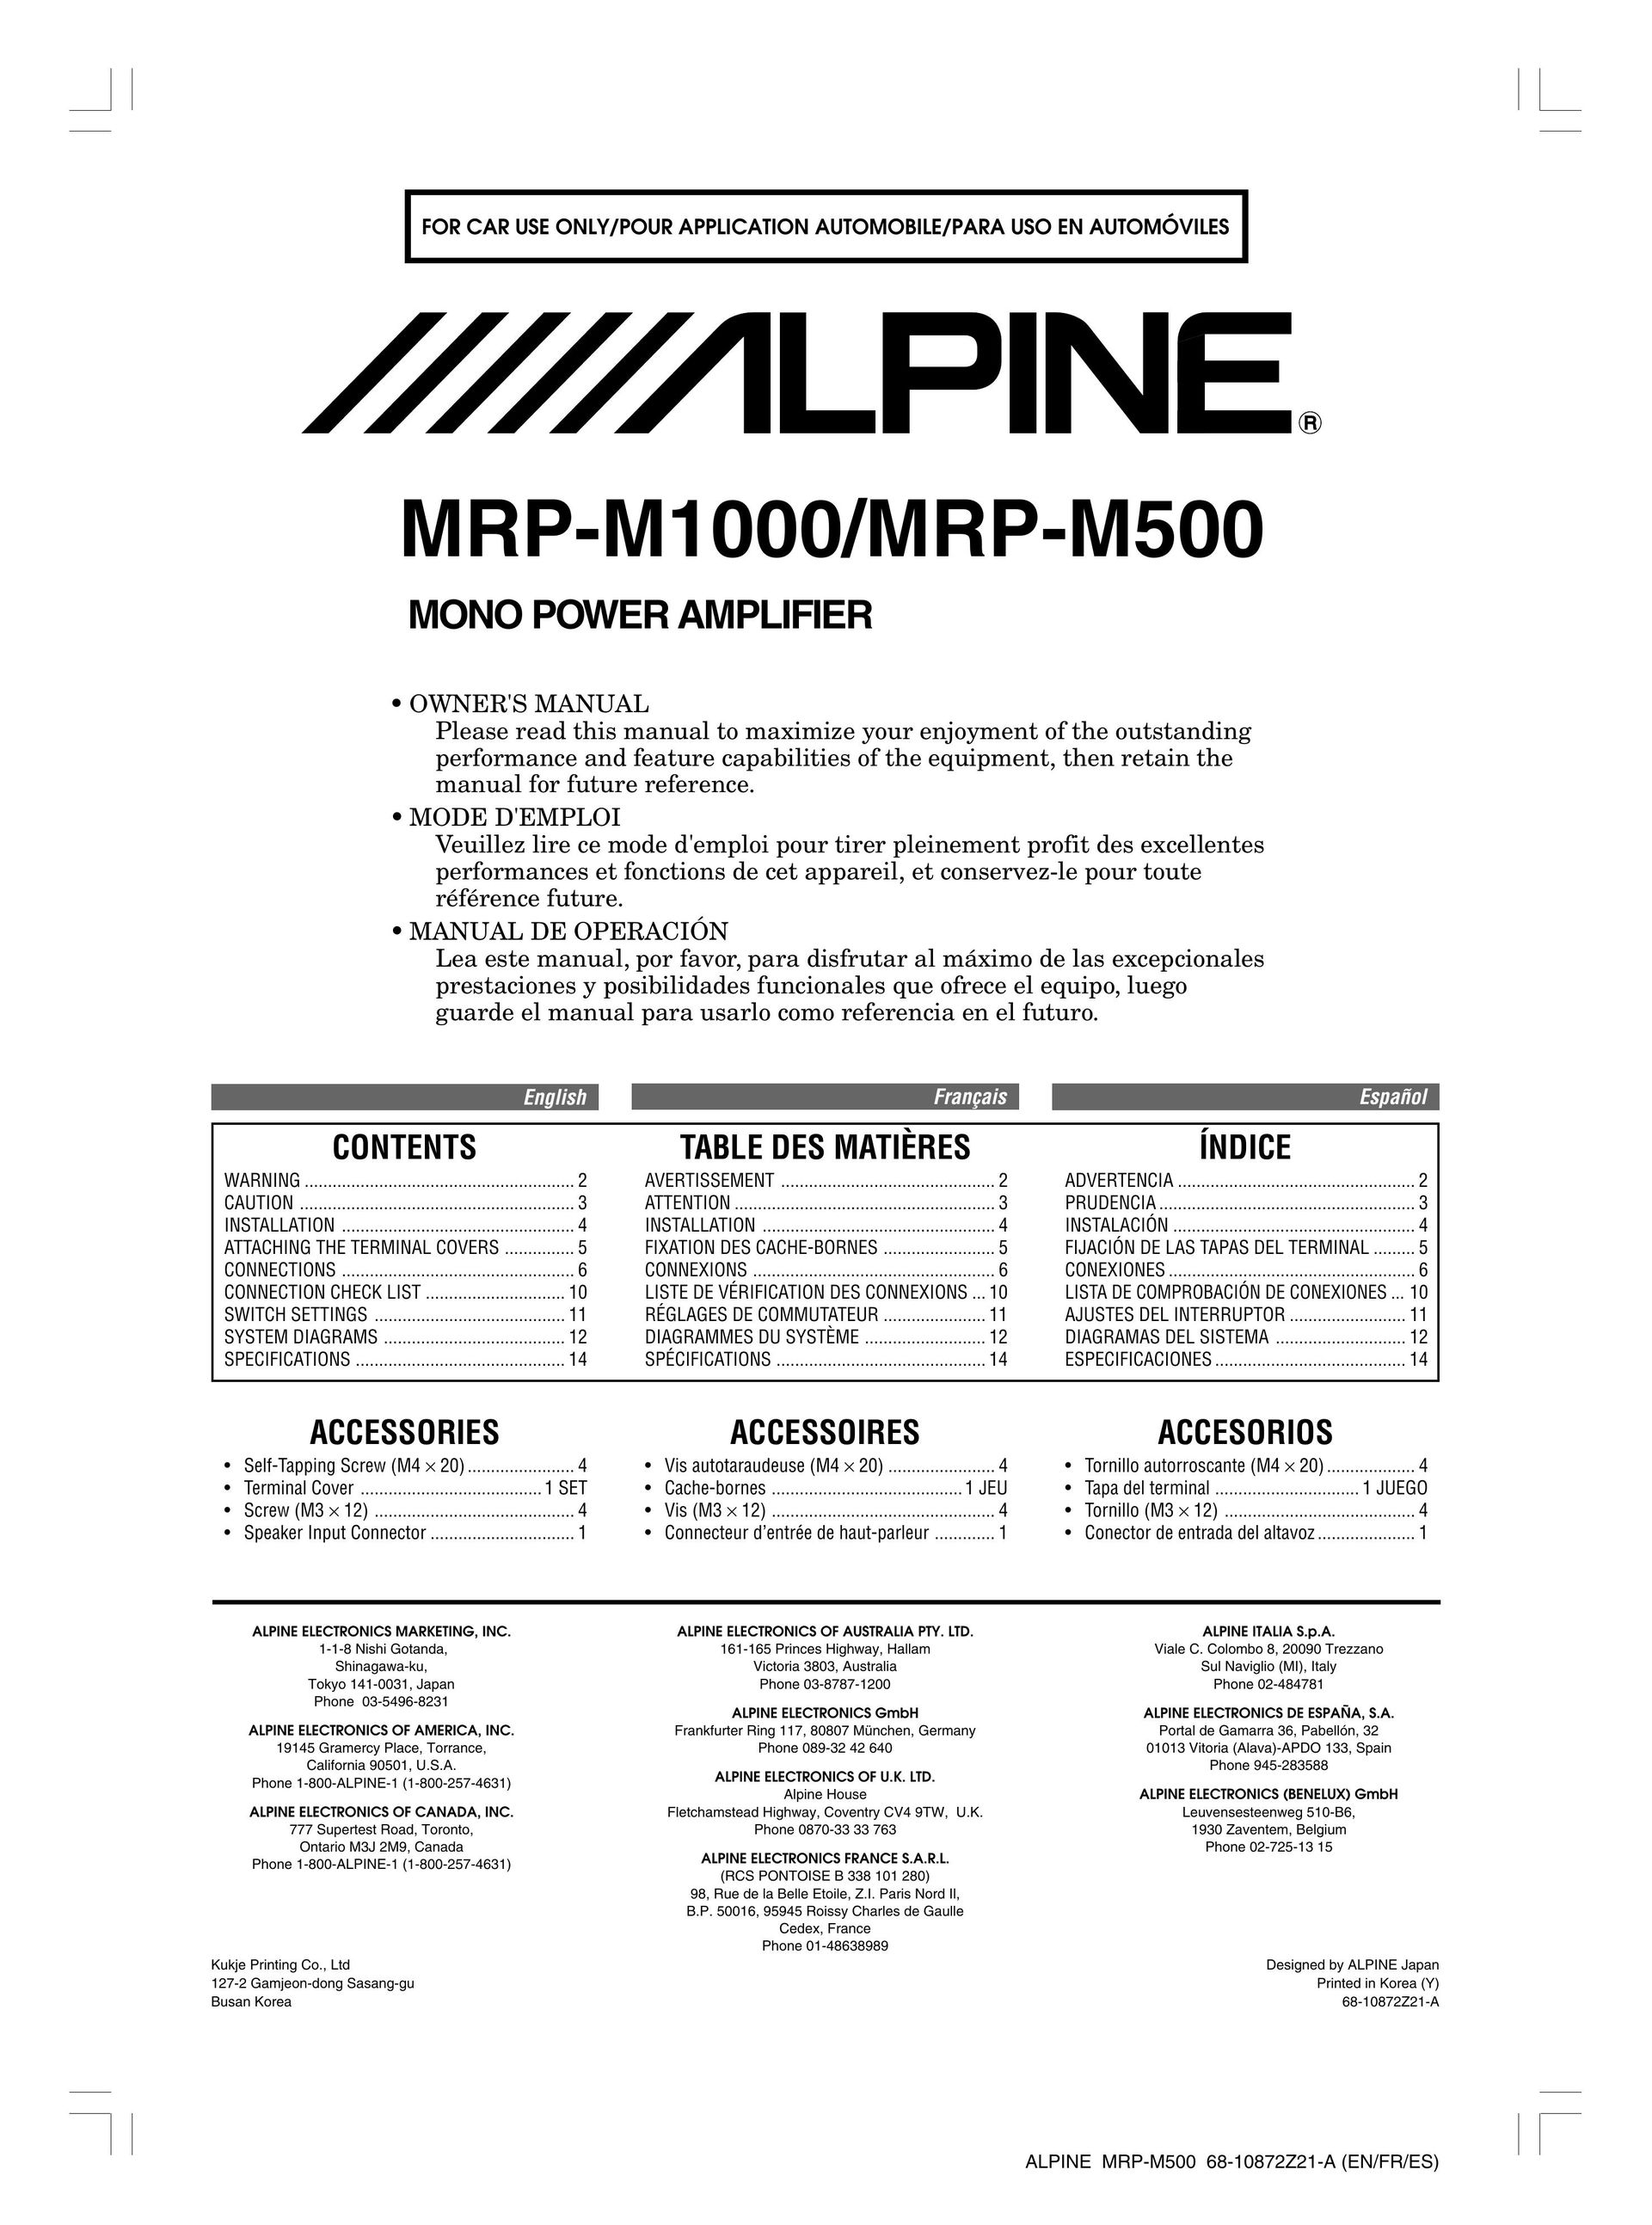 Alpine MRD-M1000 Stereo Amplifier User Manual